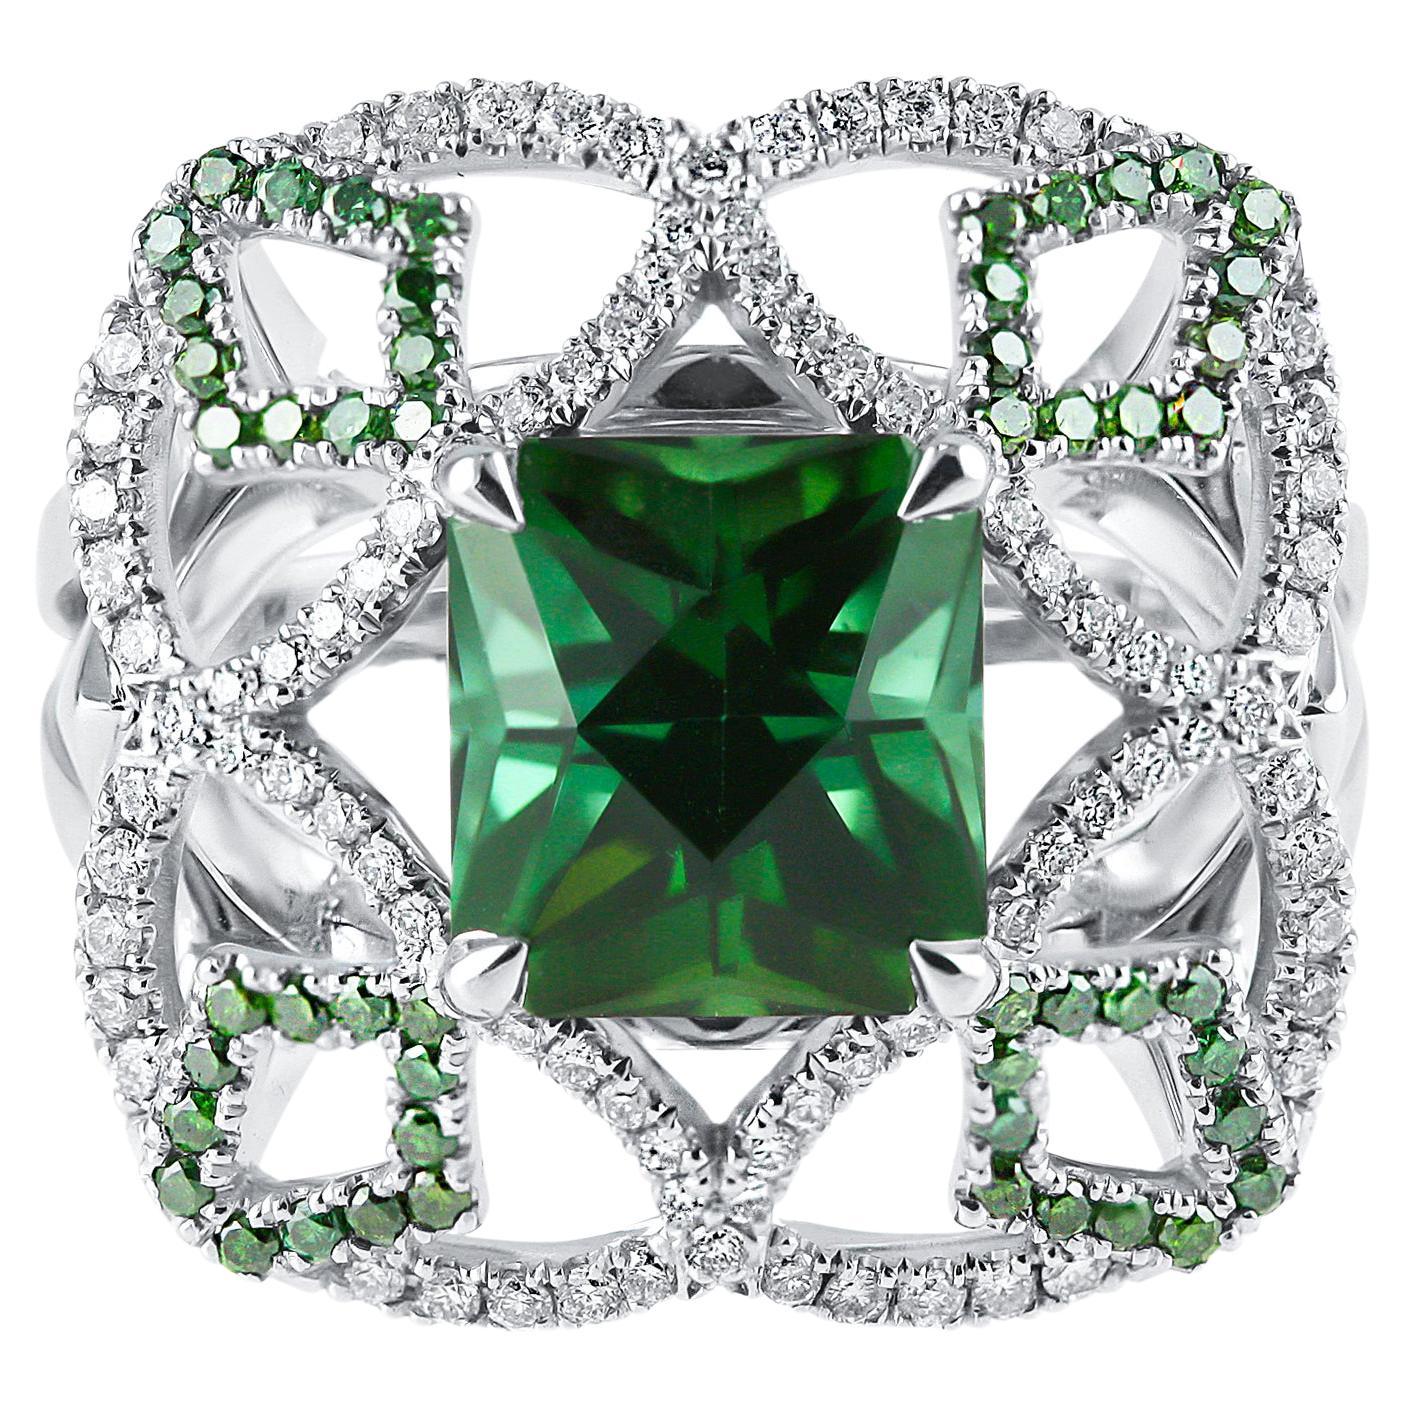 KATA Pomona 3.76ct Asscher Cut Green Tourmaline with Green White Diamond Ring